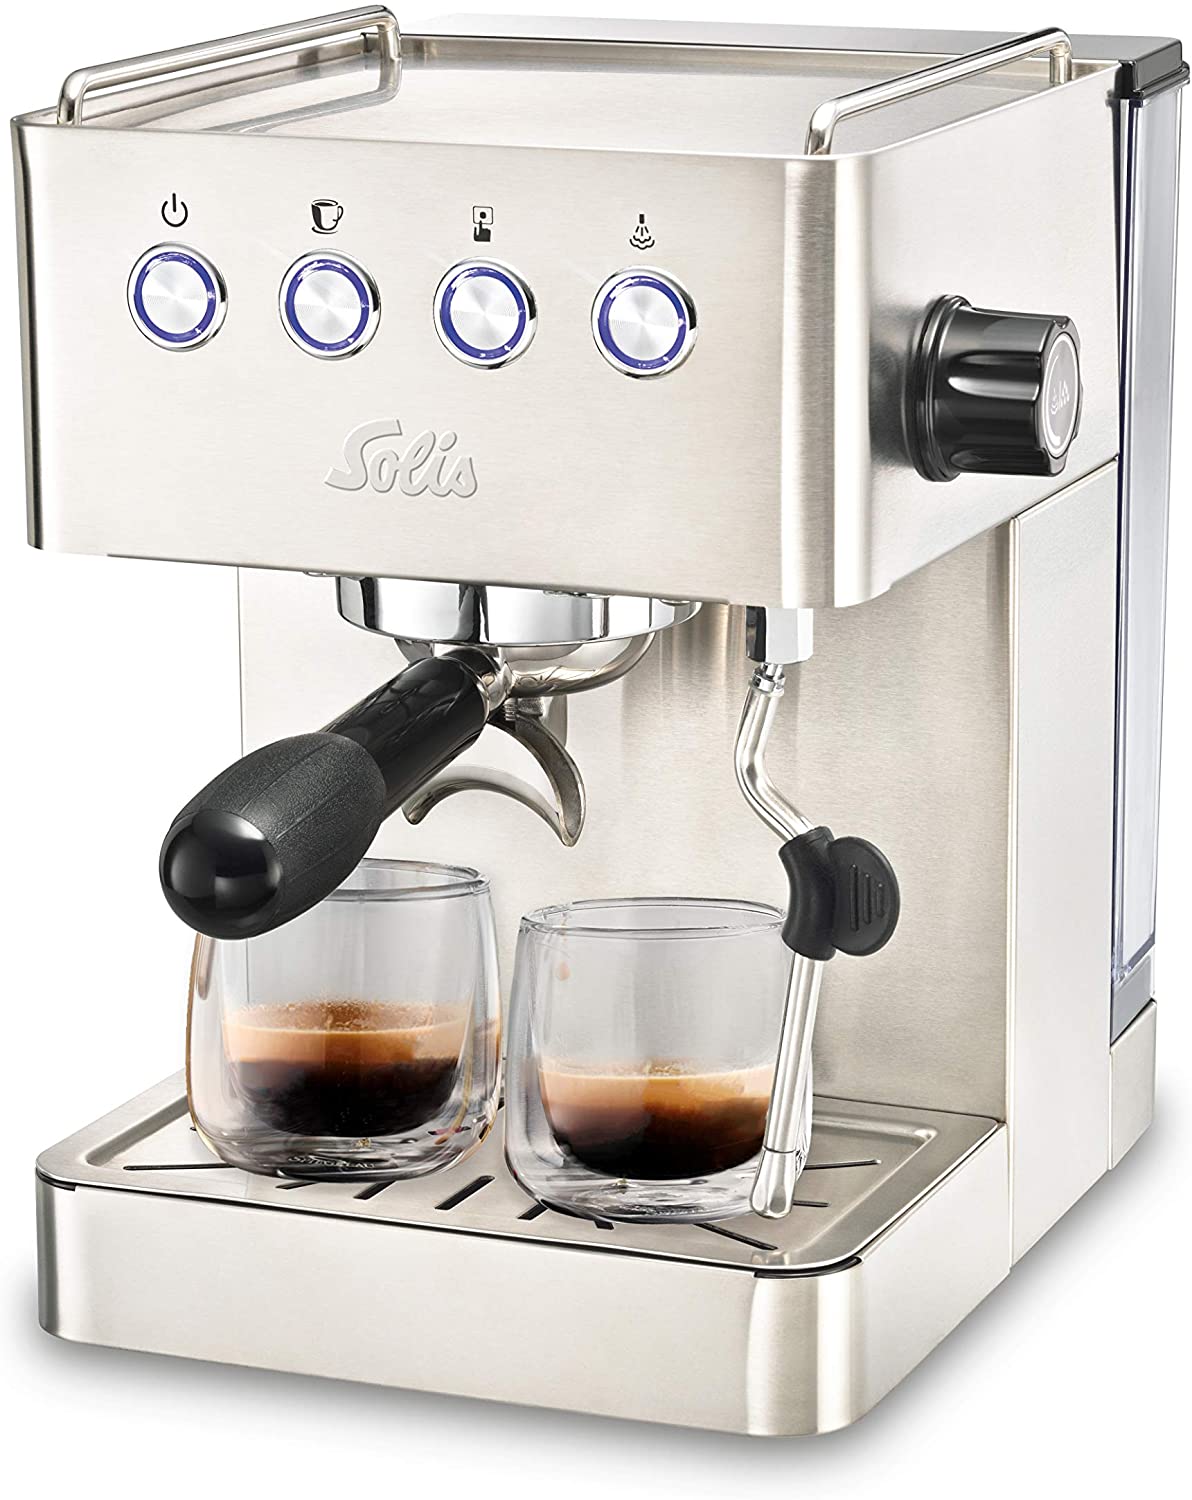 Solis Espresso Machine